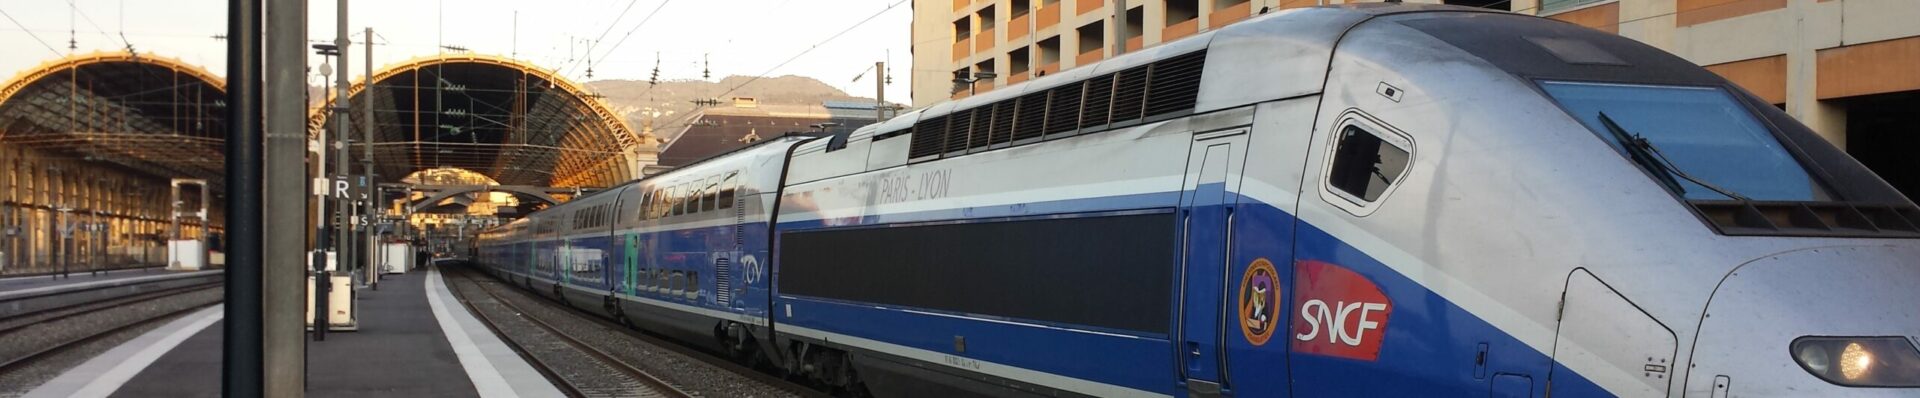 TGVbulletin18grd